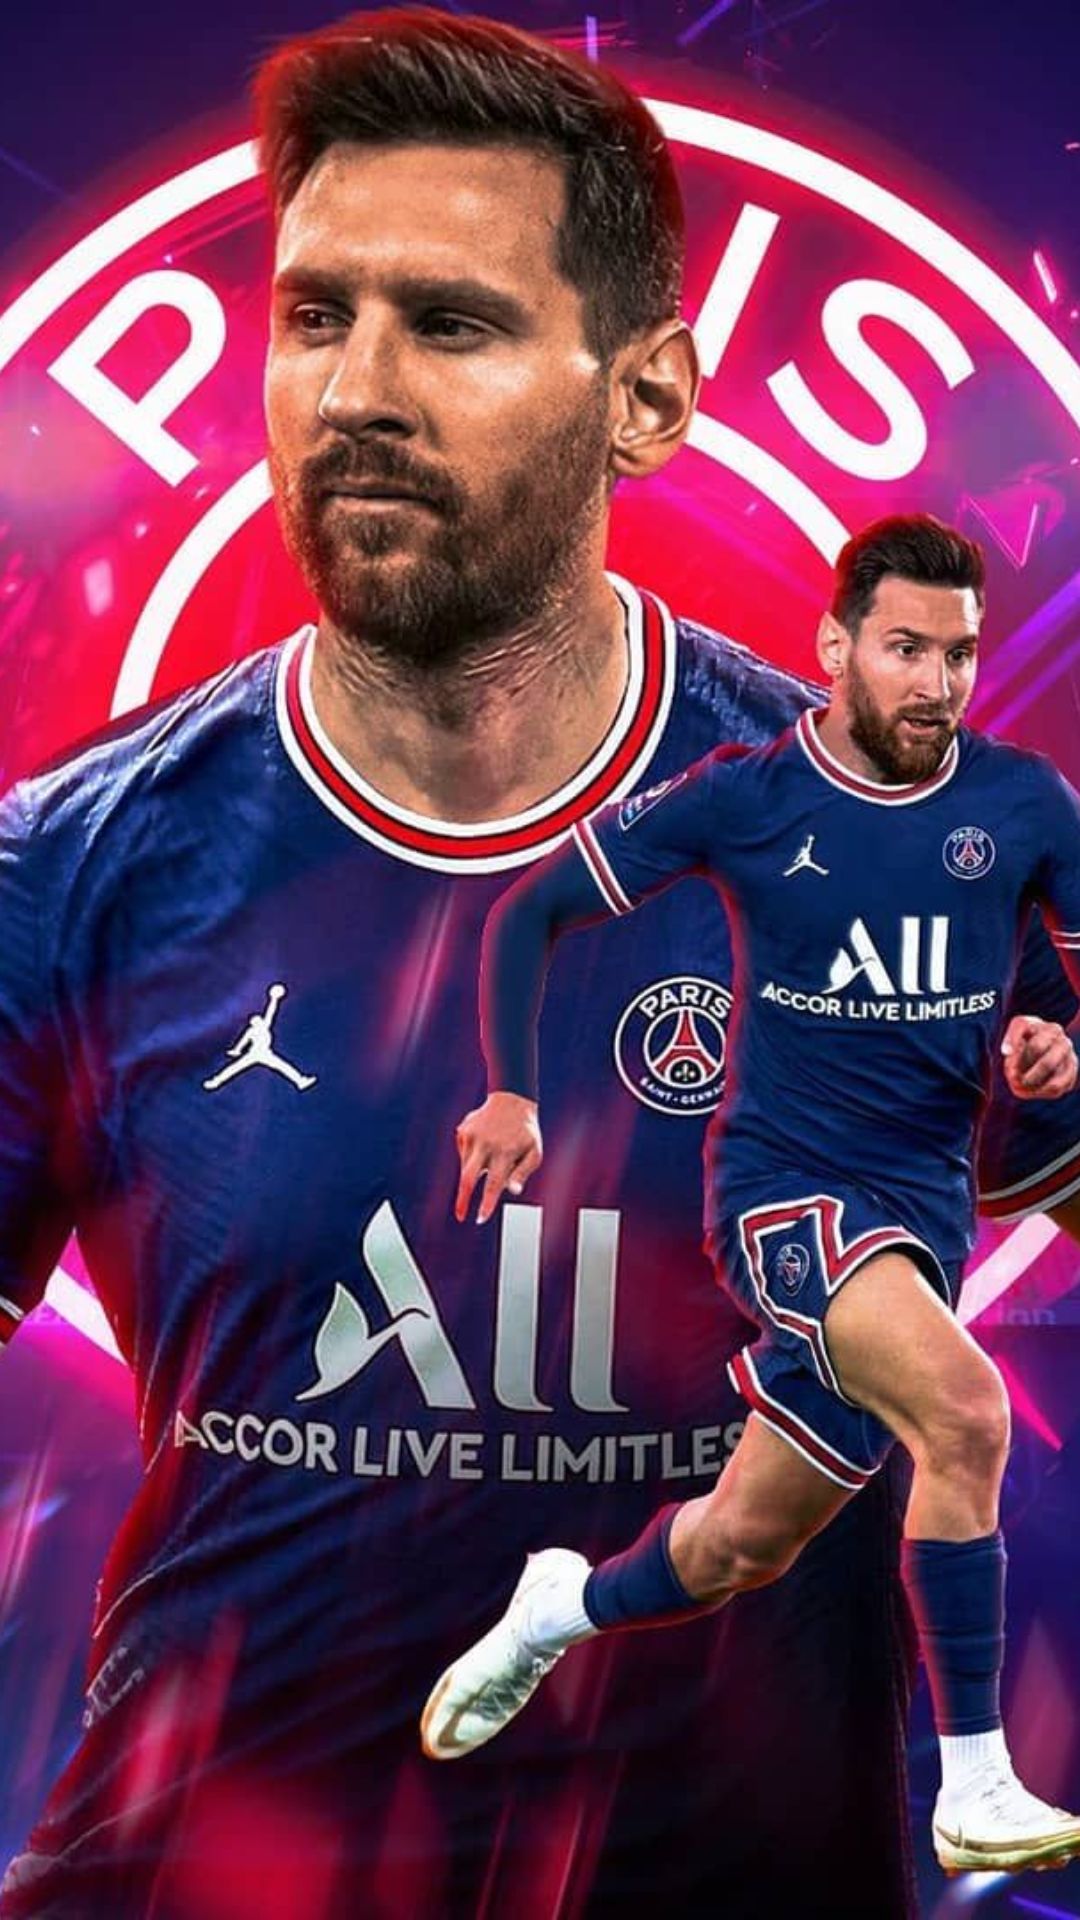 Messi 2022 Wallpaper Free Messi 2022 Background